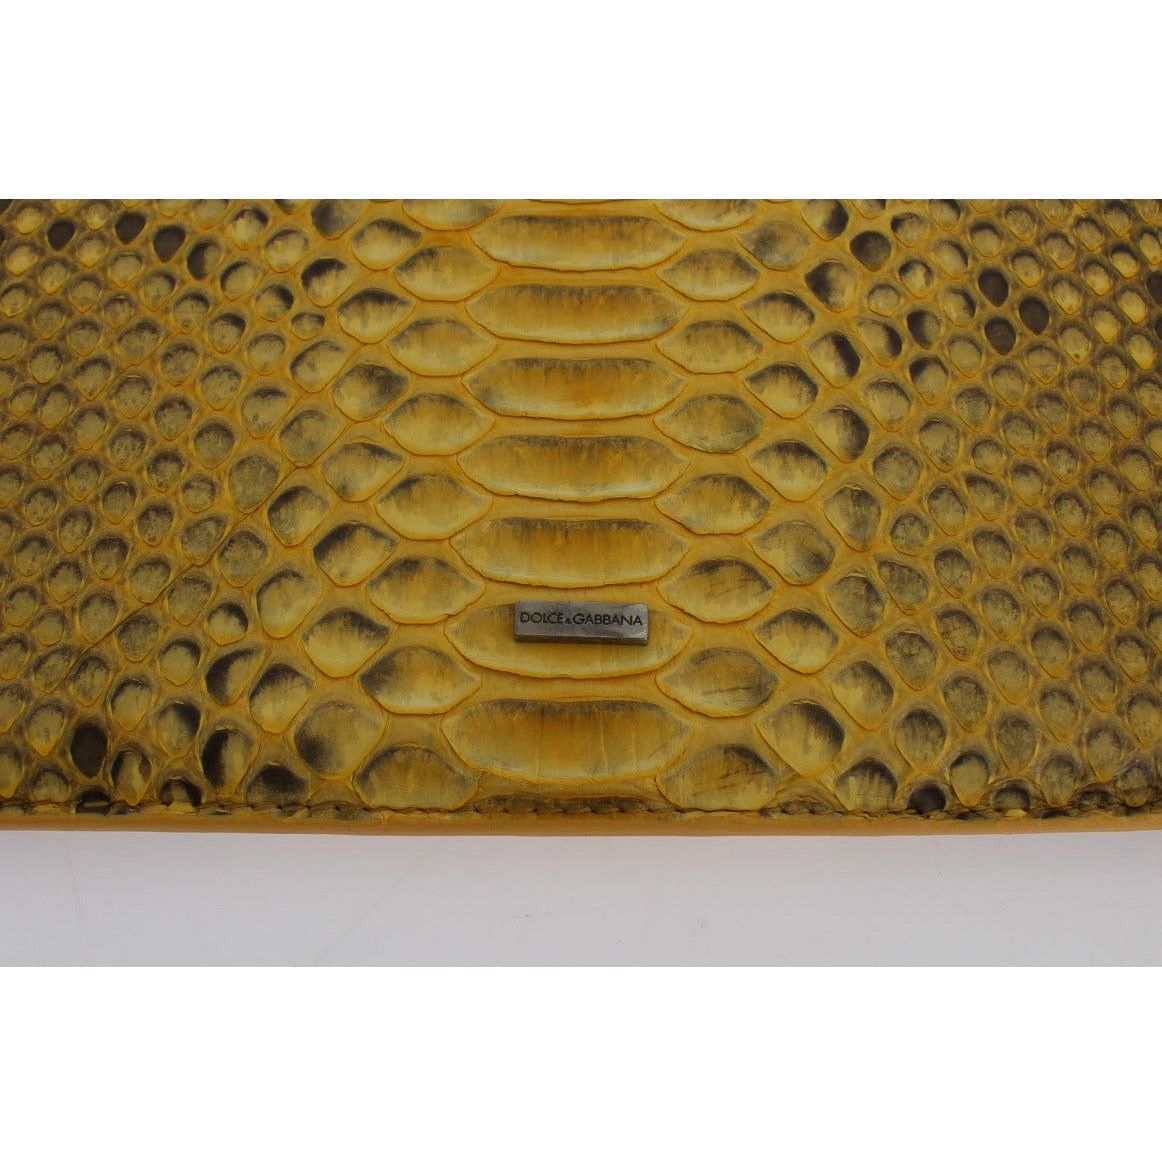 Dolce & GabbanaSleek Python Snakeskin Tablet Case in YellowMcRichard Designer Brands£329.00